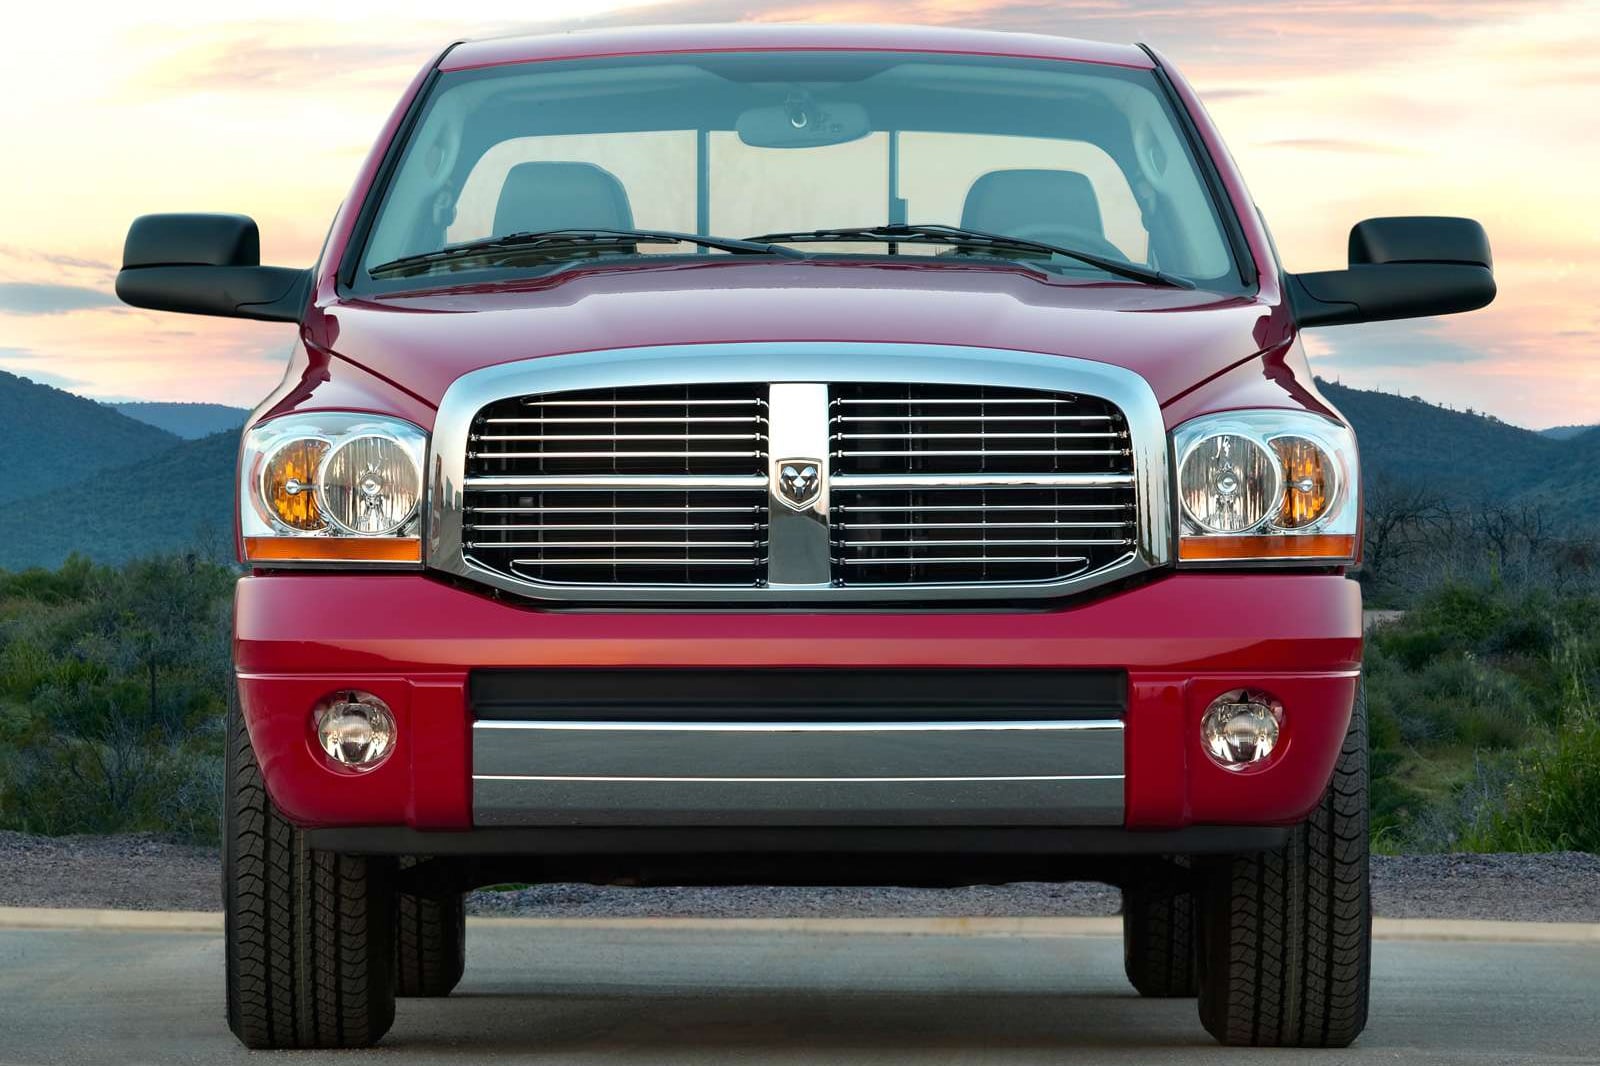 Dodge Ram 1500 Truck: Models, Generations and Details